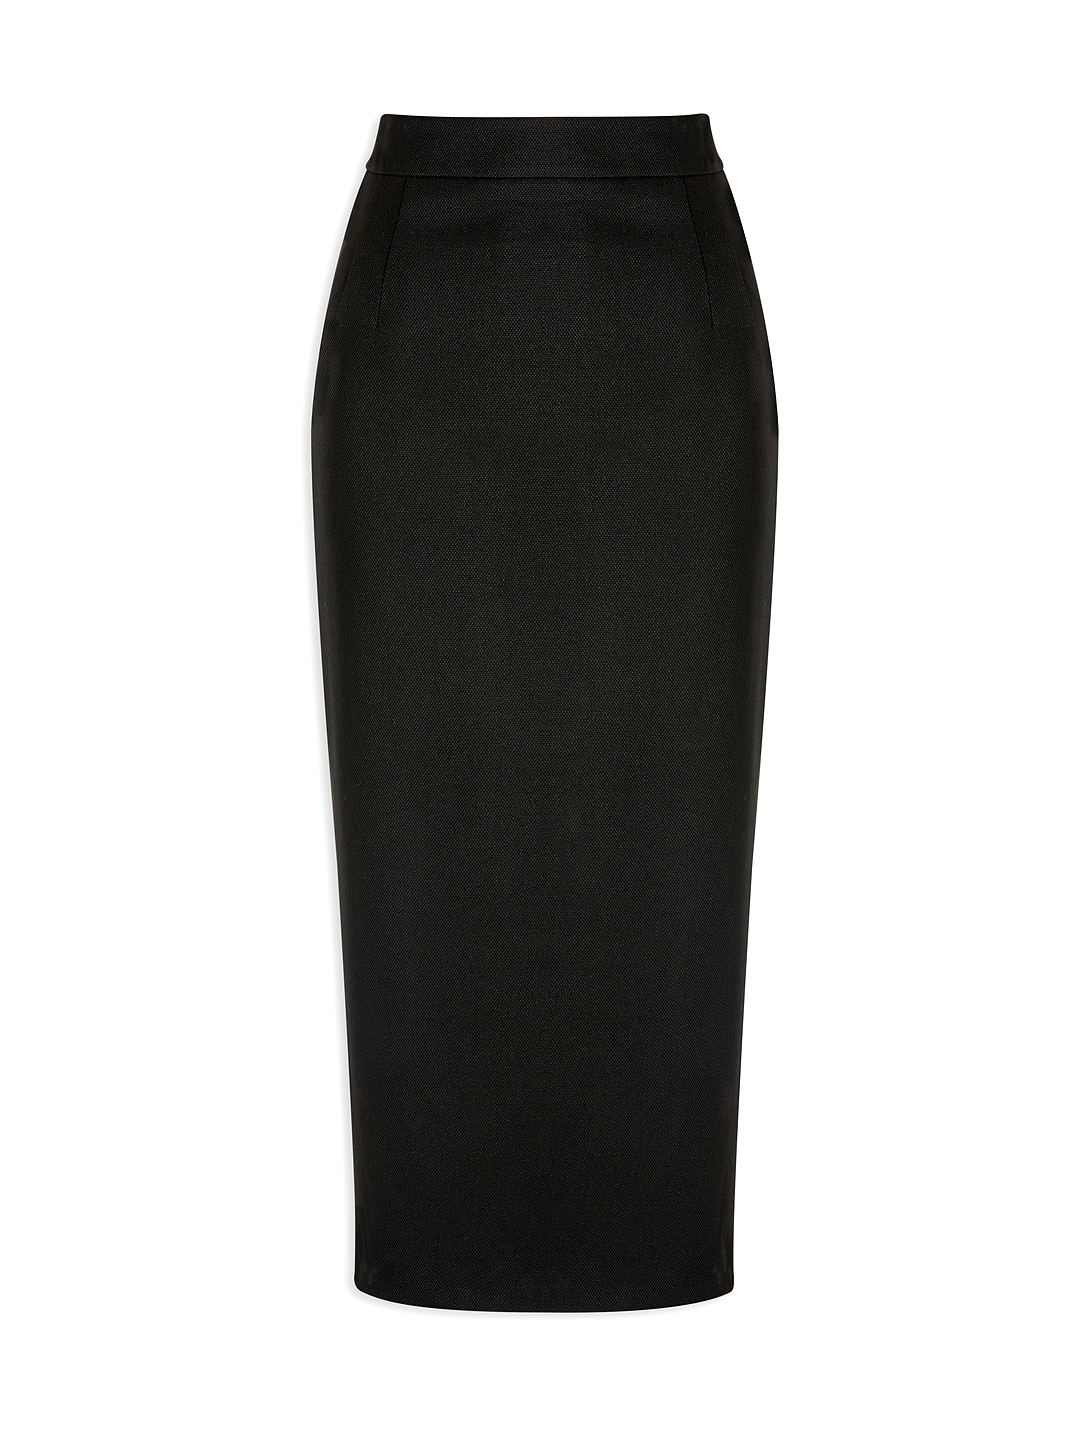 Buy Next Women Black Pencil Skirt - Skirts for Women 1839102 | Myntra